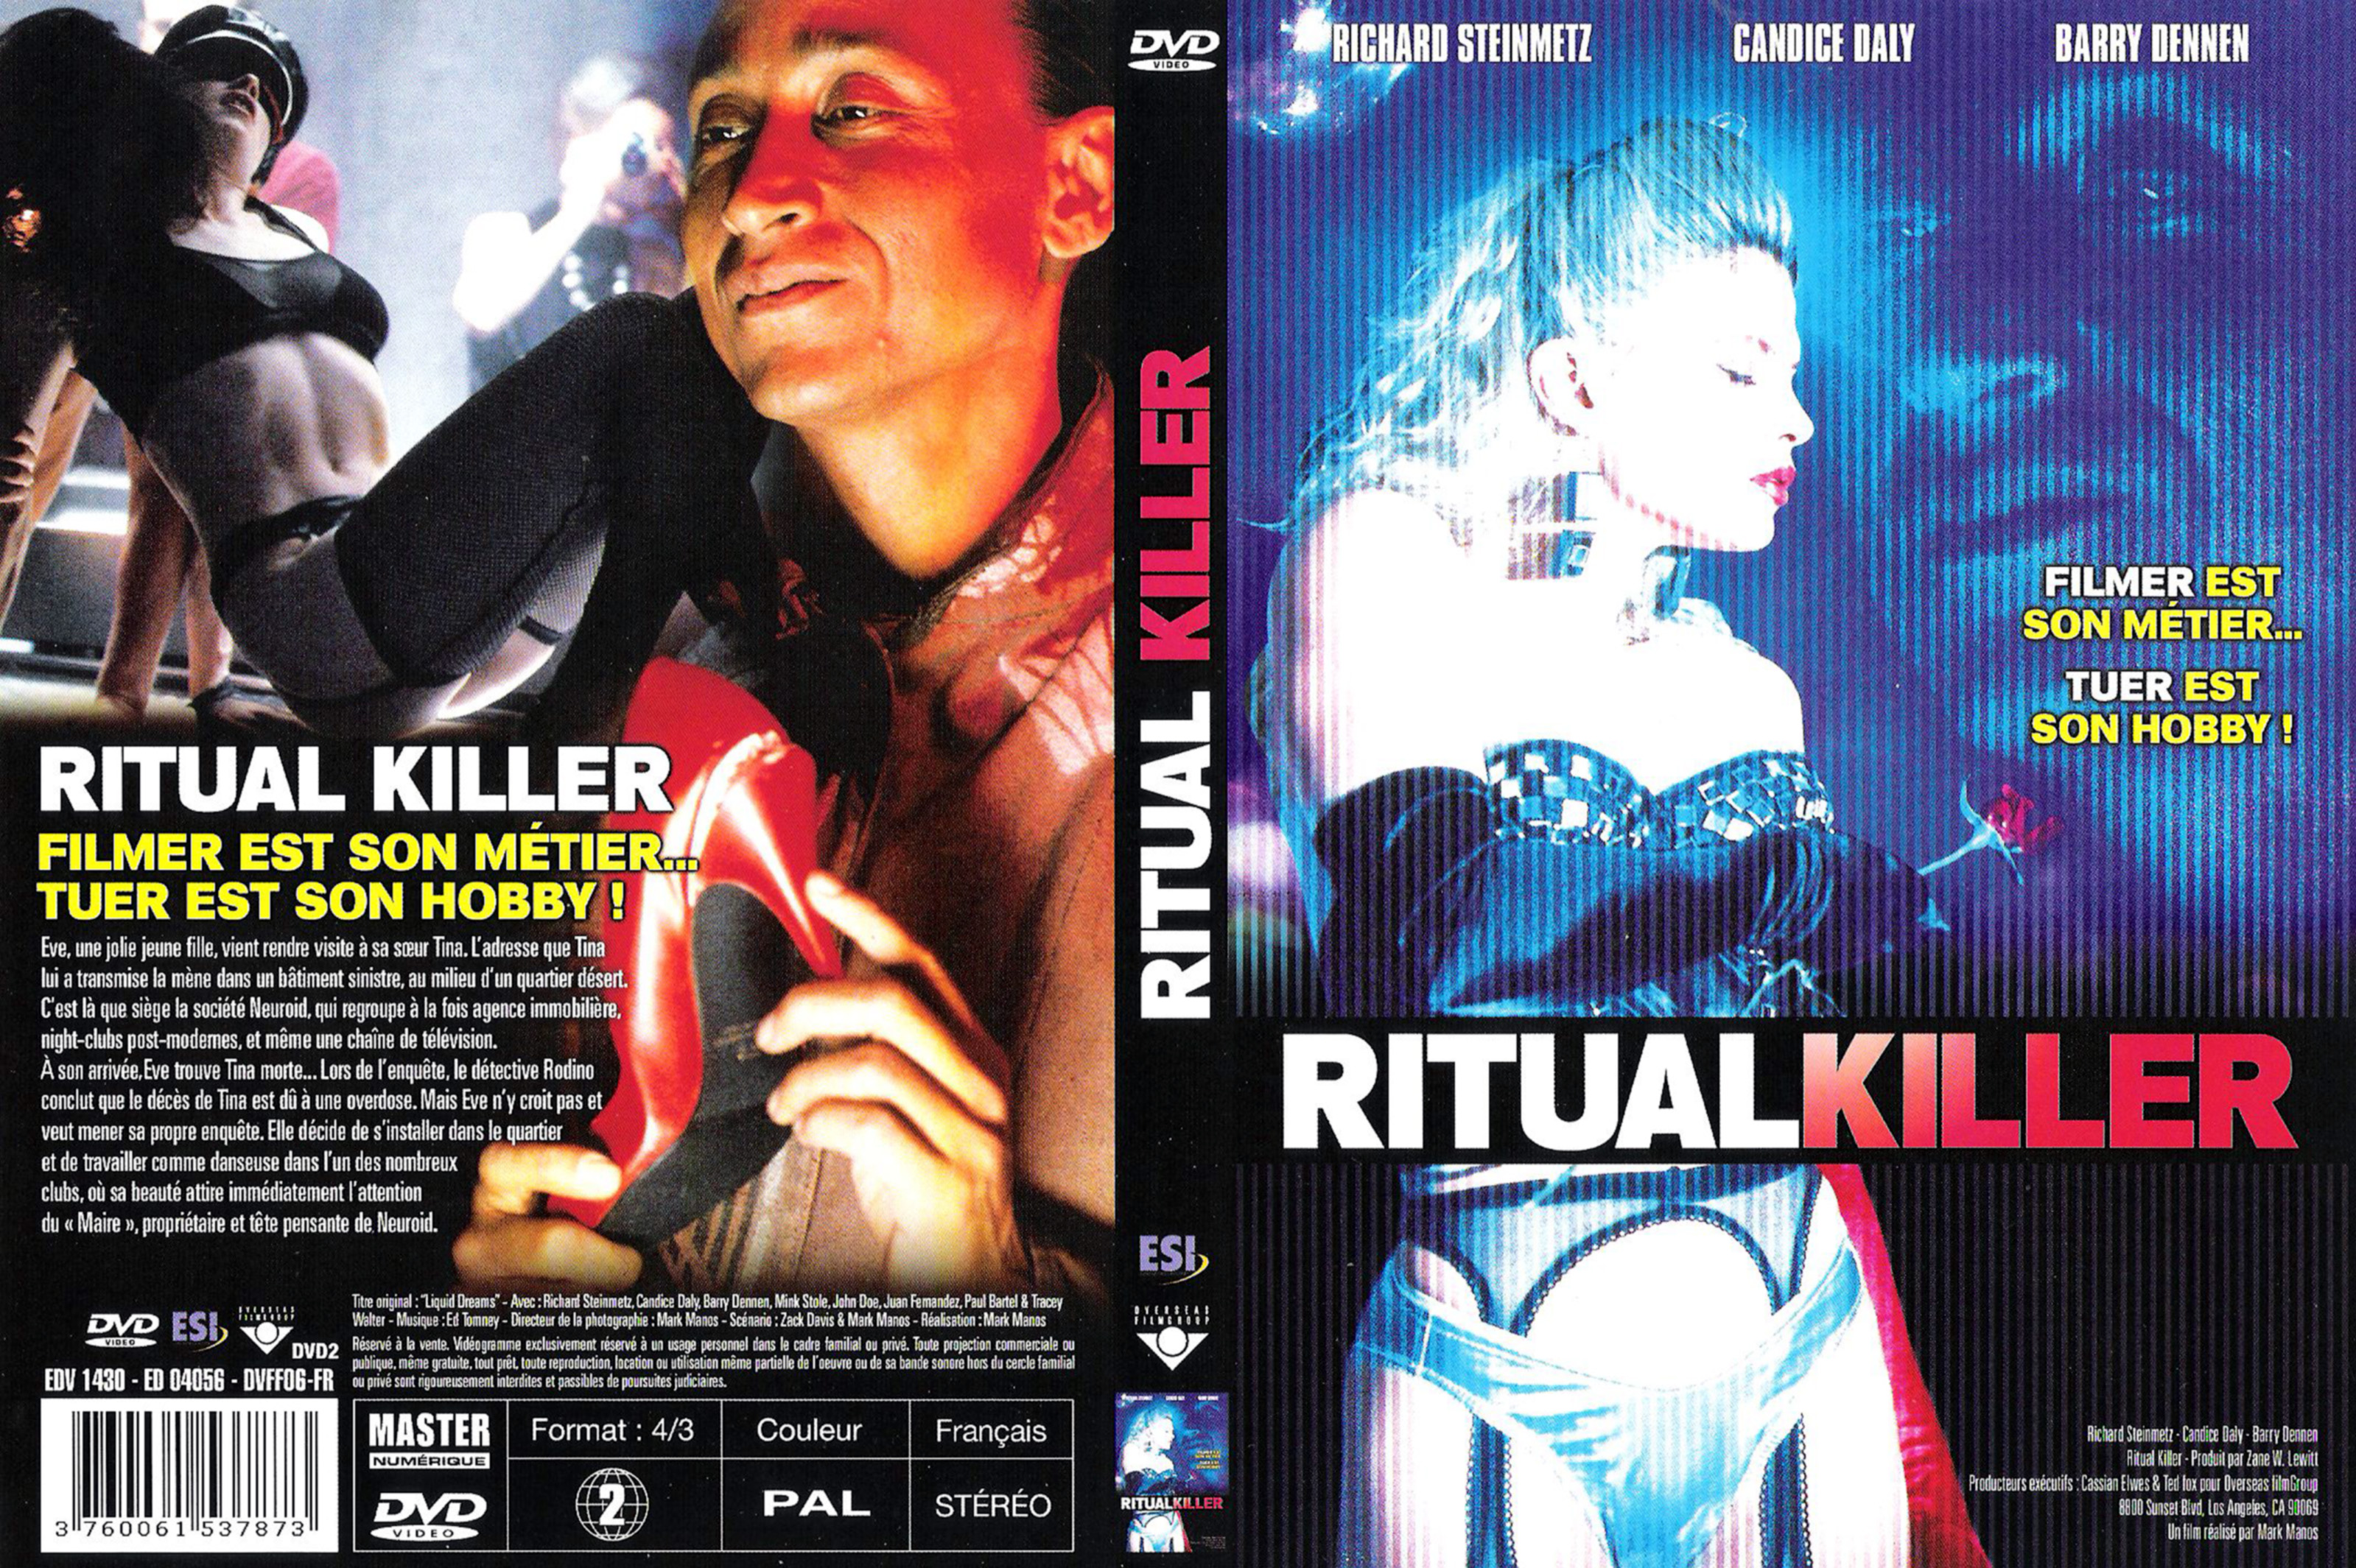 Jaquette DVD Ritual killer v2